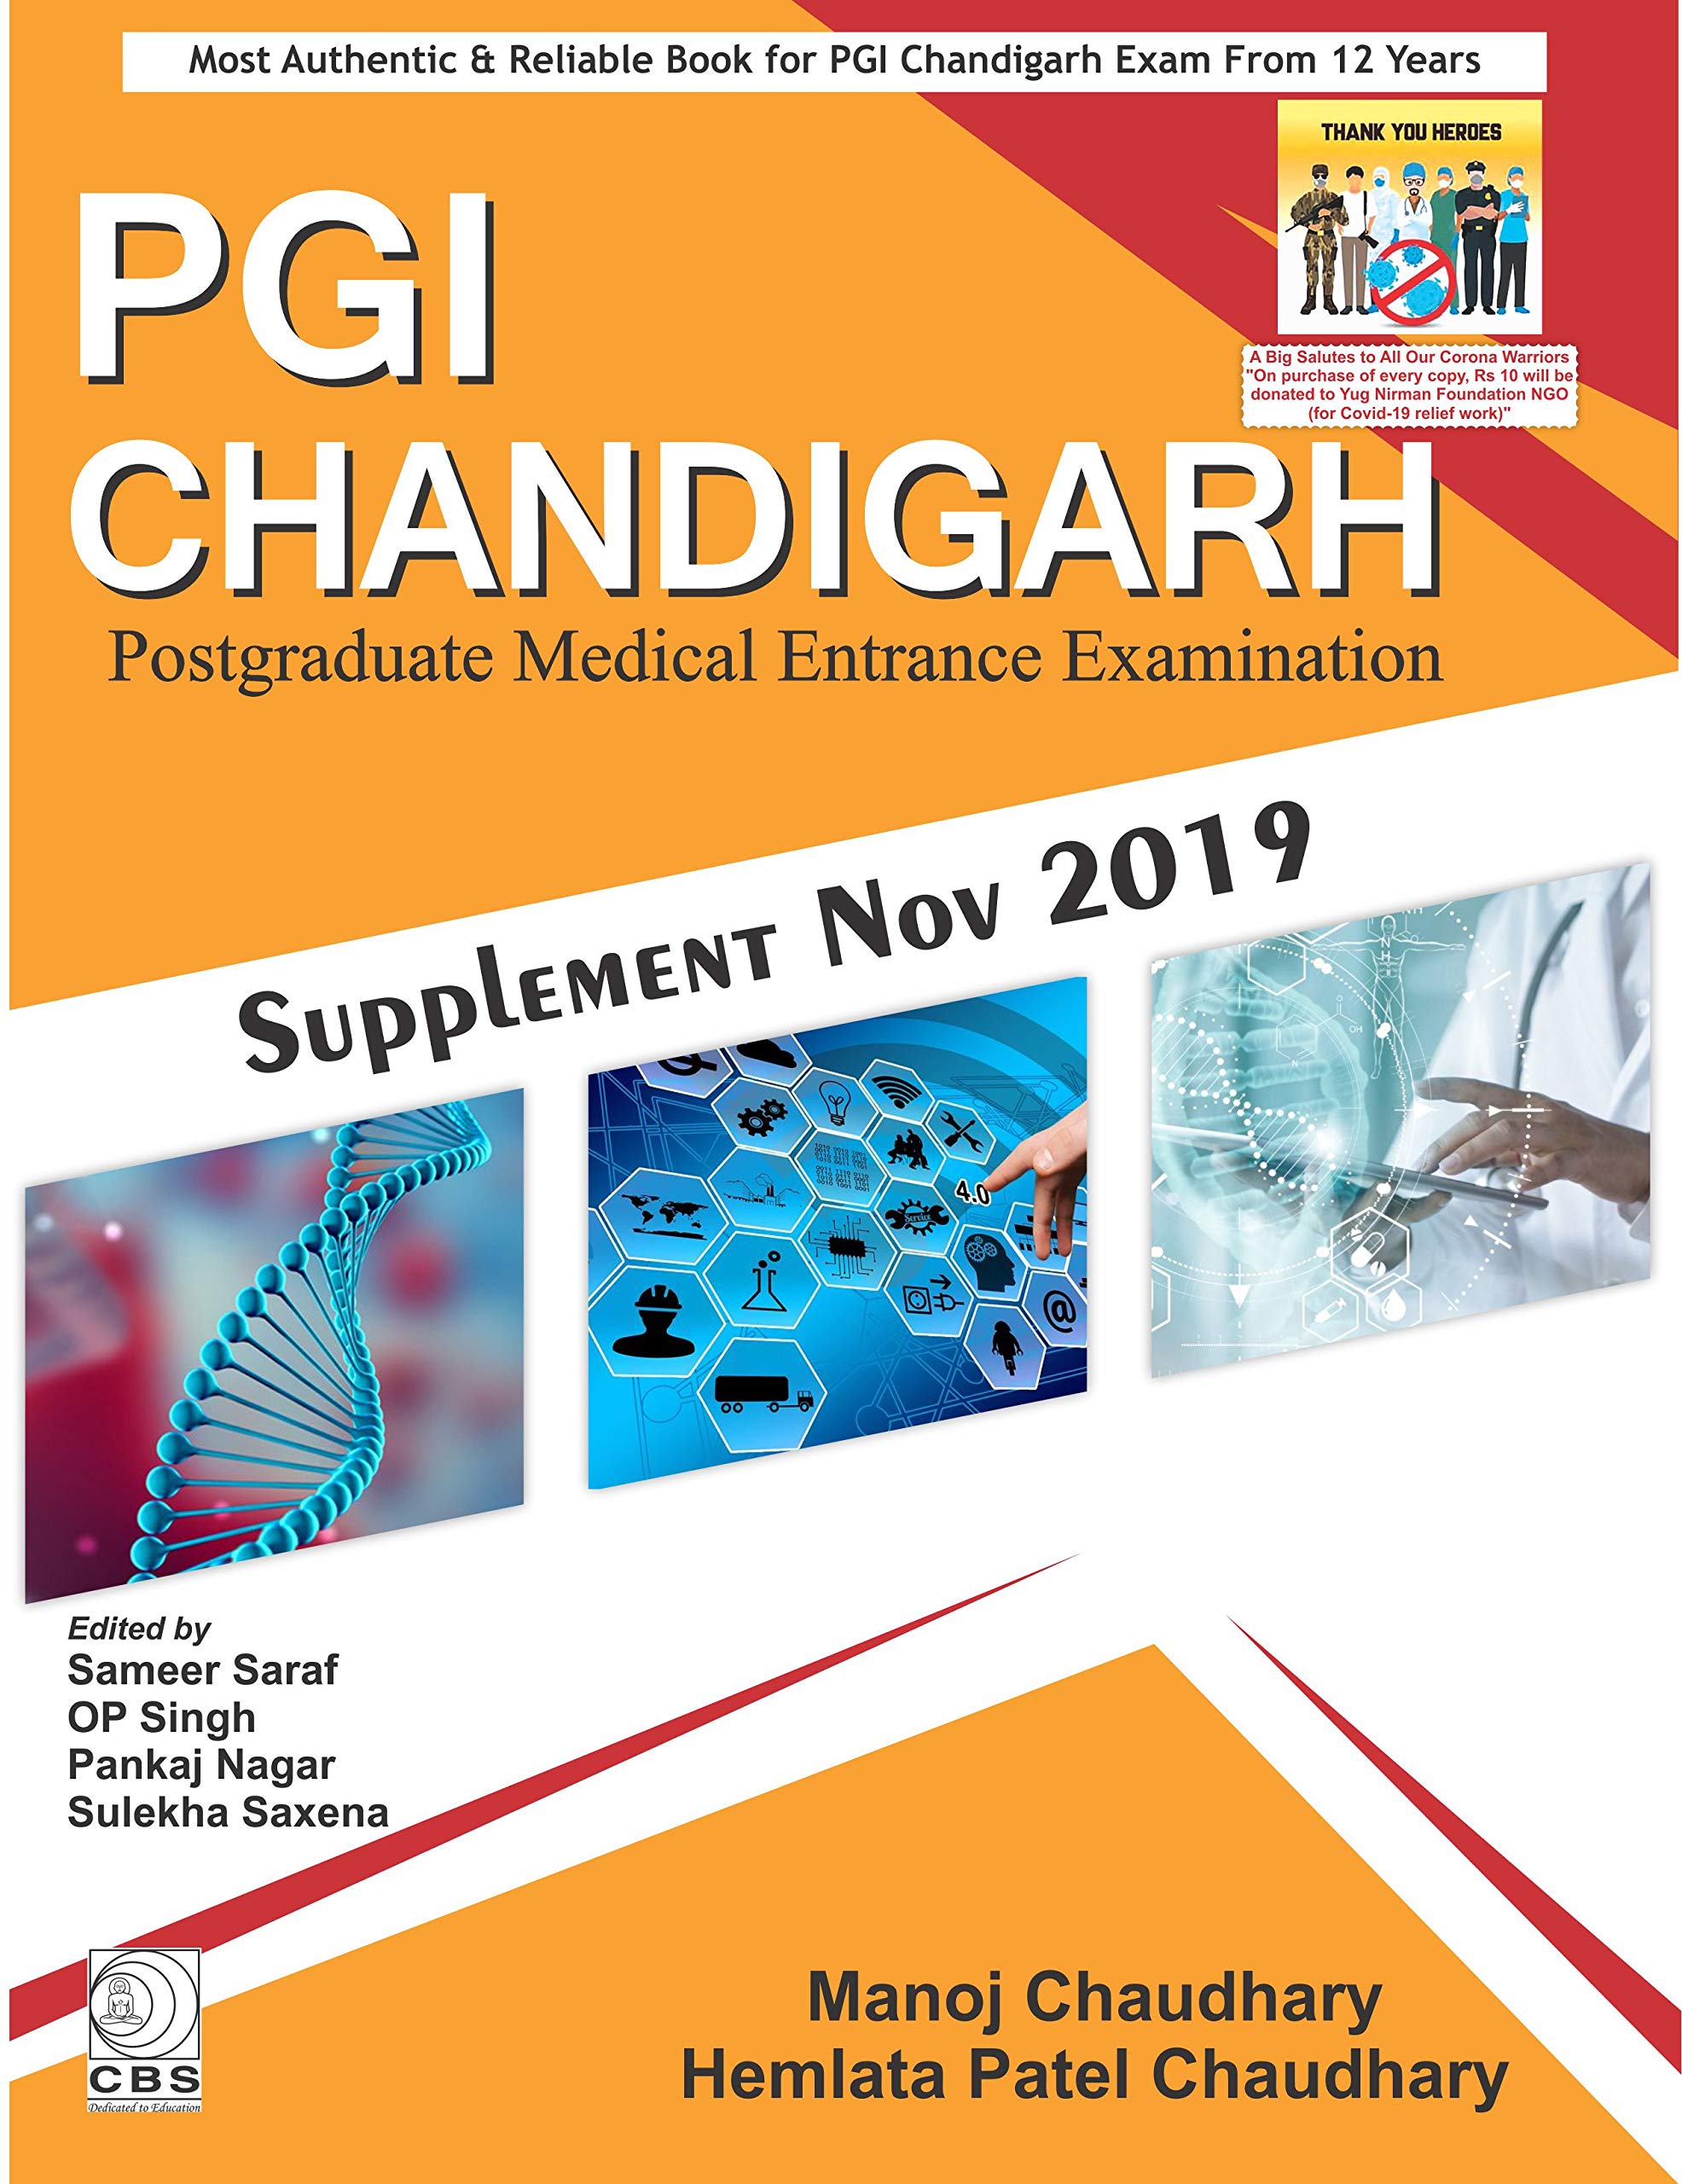 pgi-chandigarh-postgraduate-medical-entrance-examination-supplement-nov-2019-pb-2019